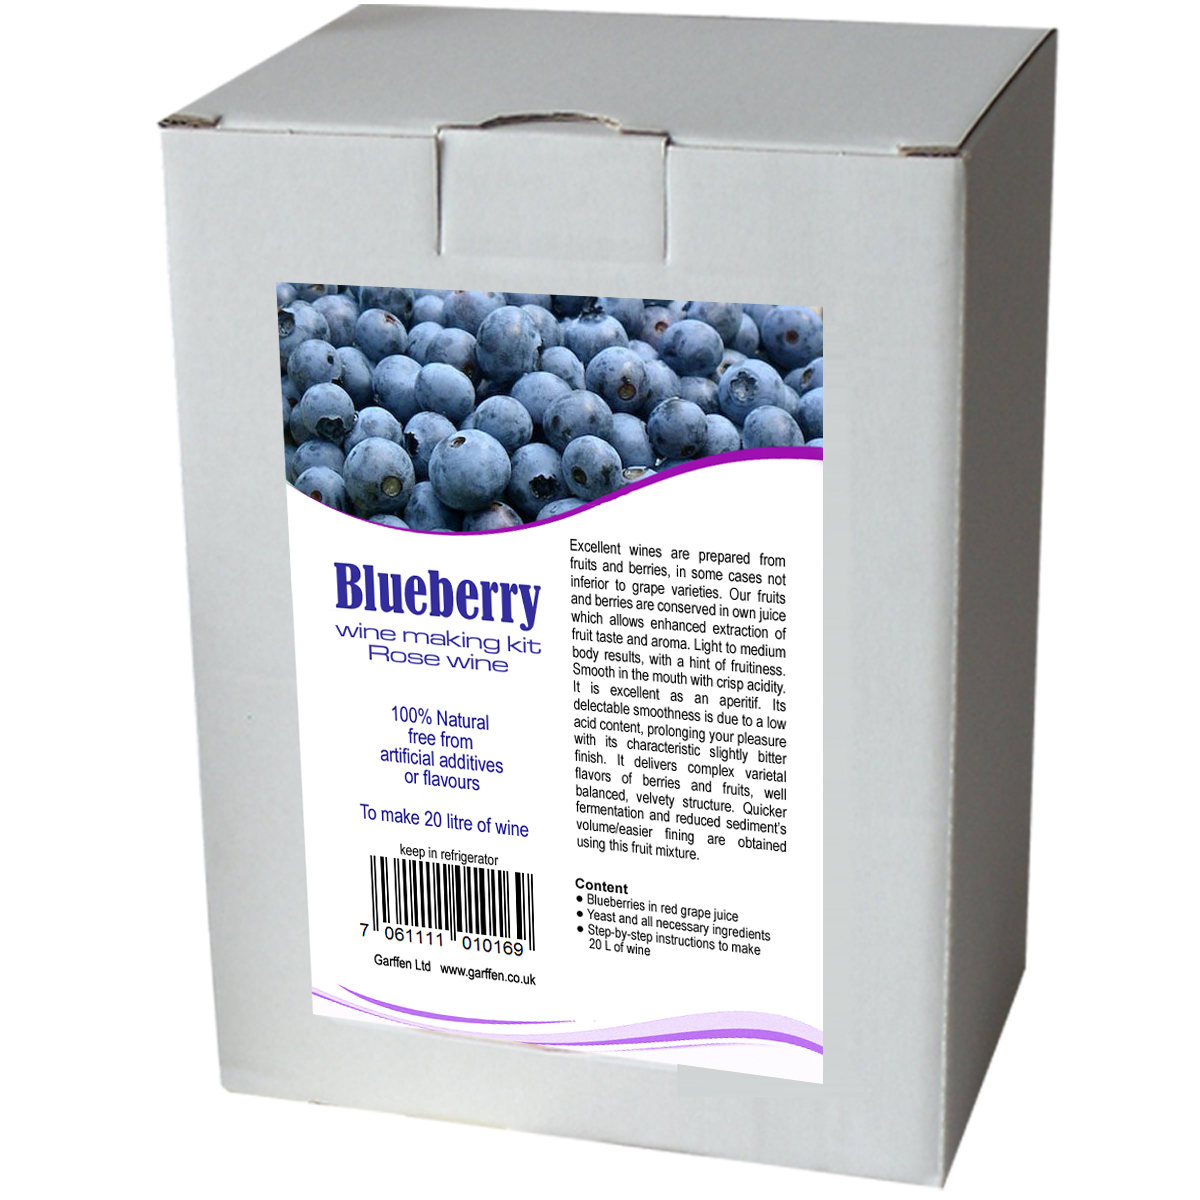 Blueberry wine making kit